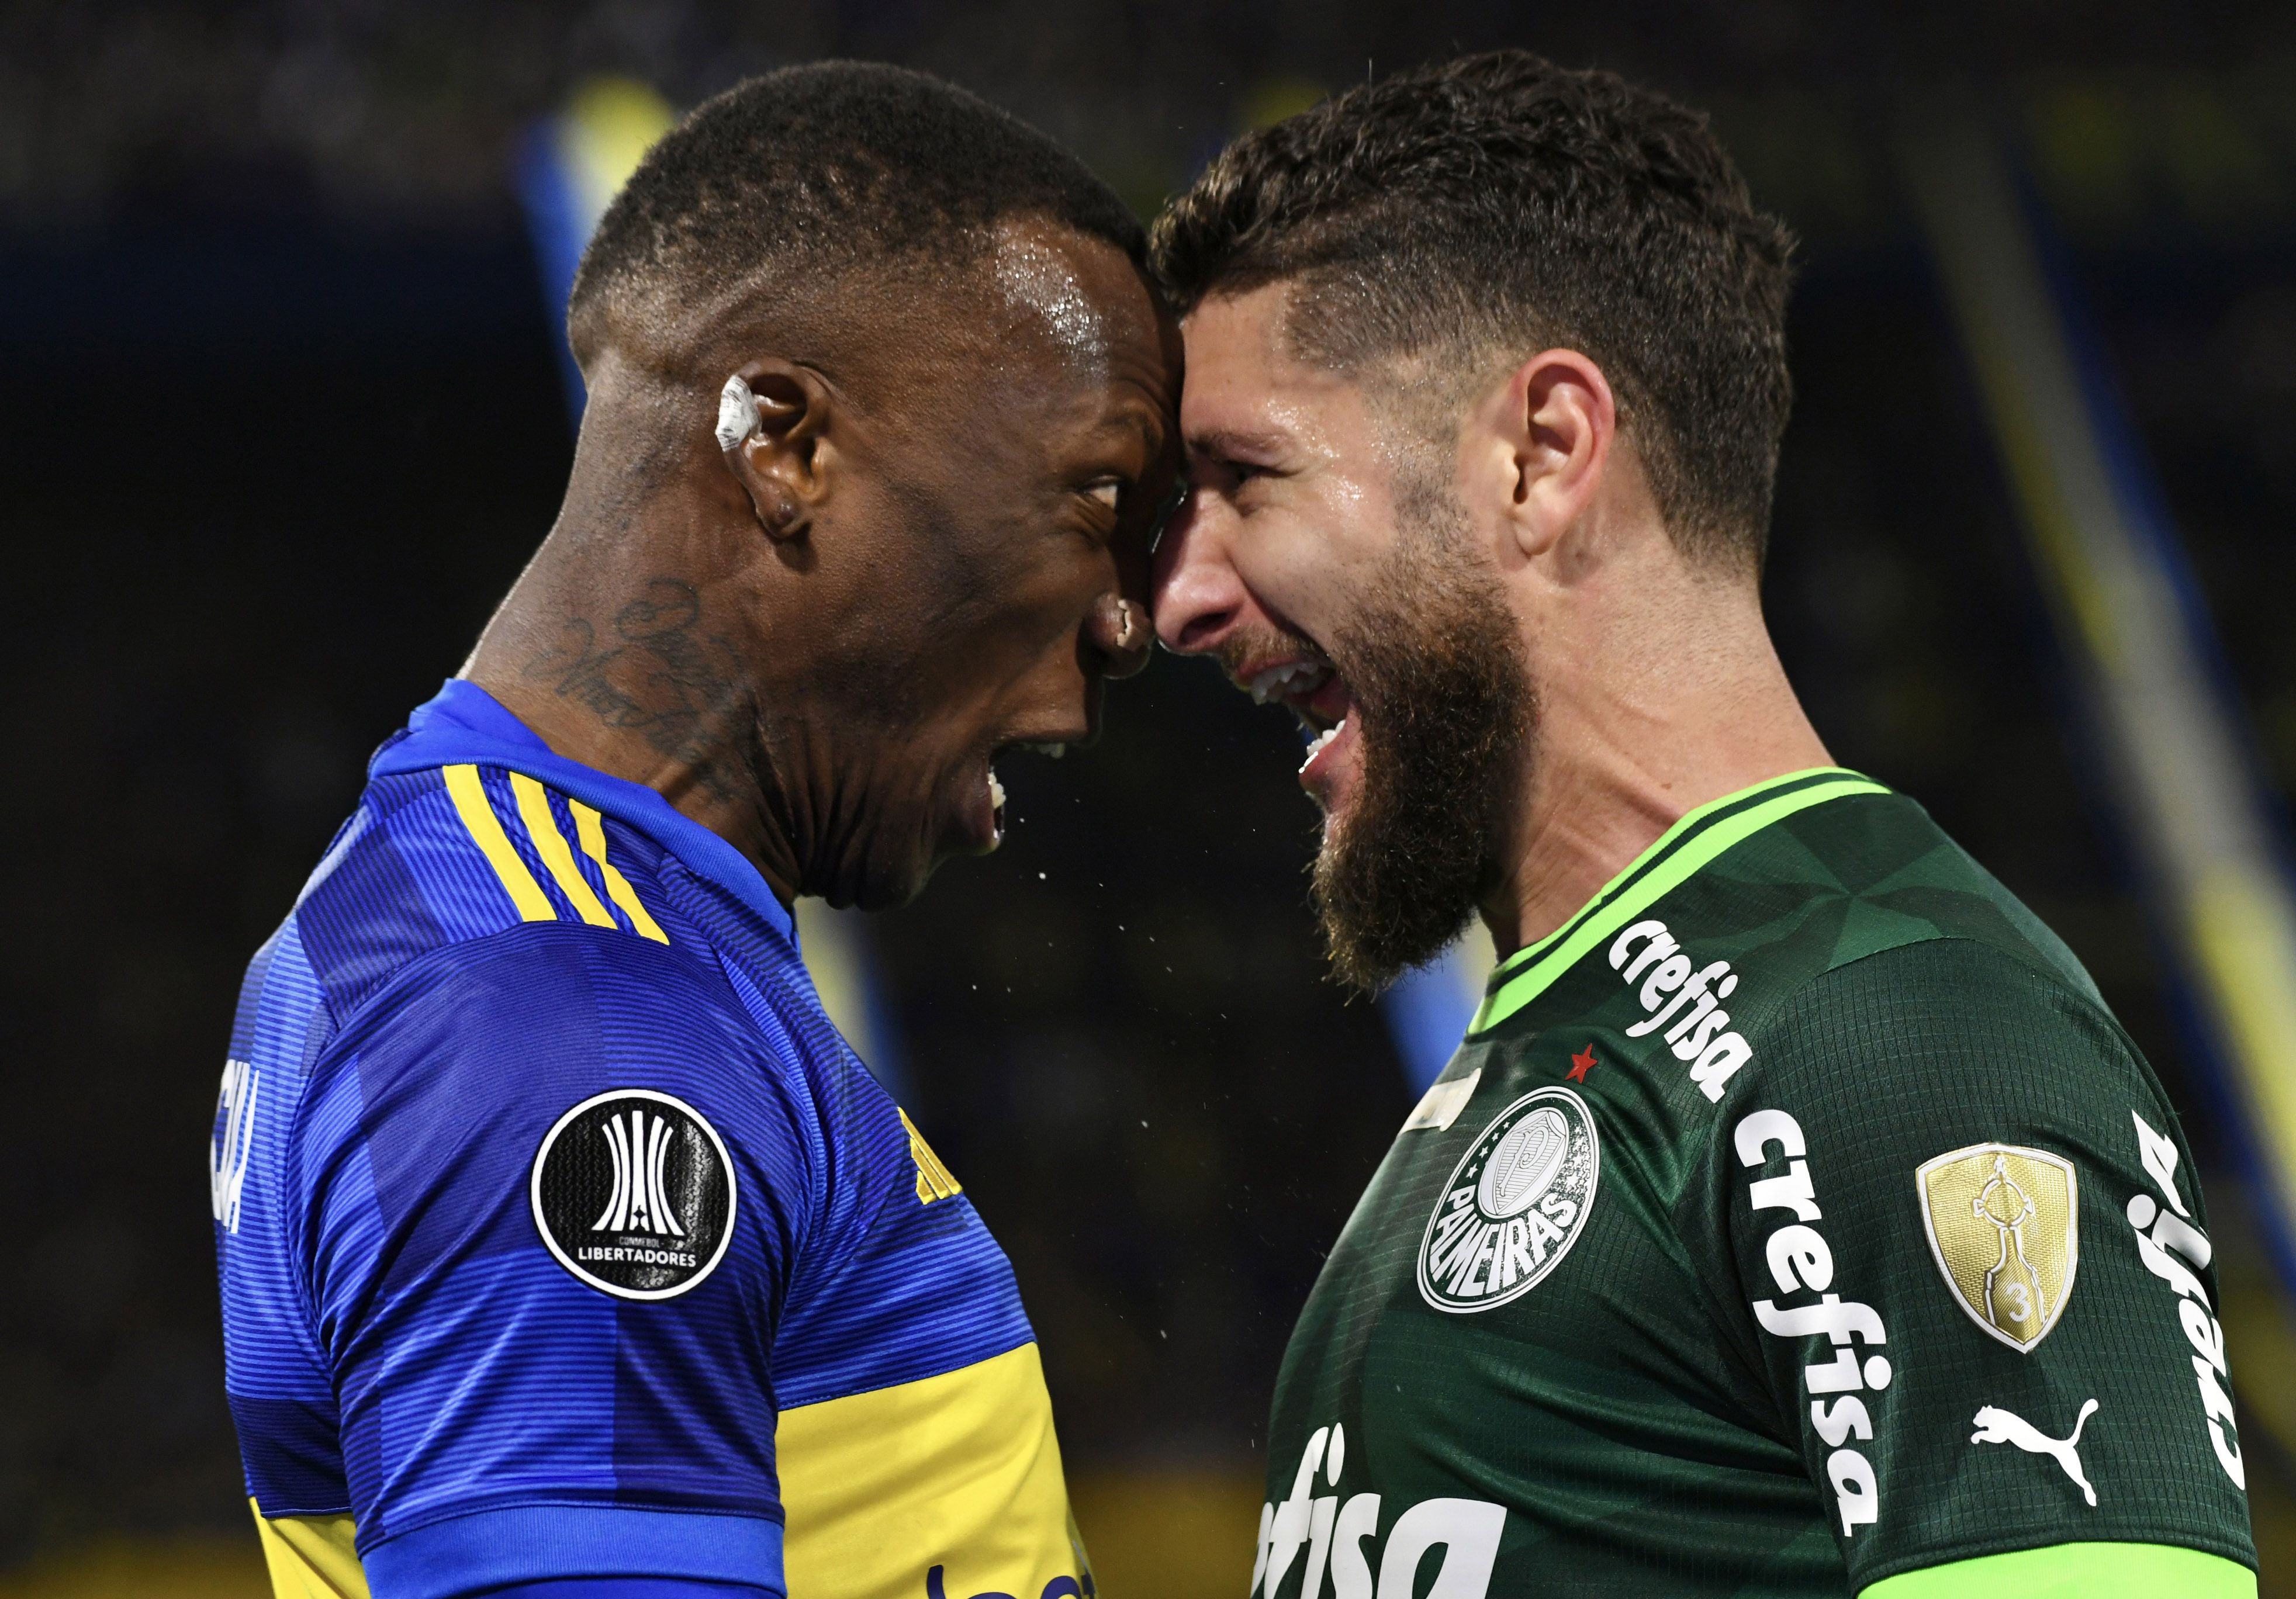 Boca vs Palmeiras